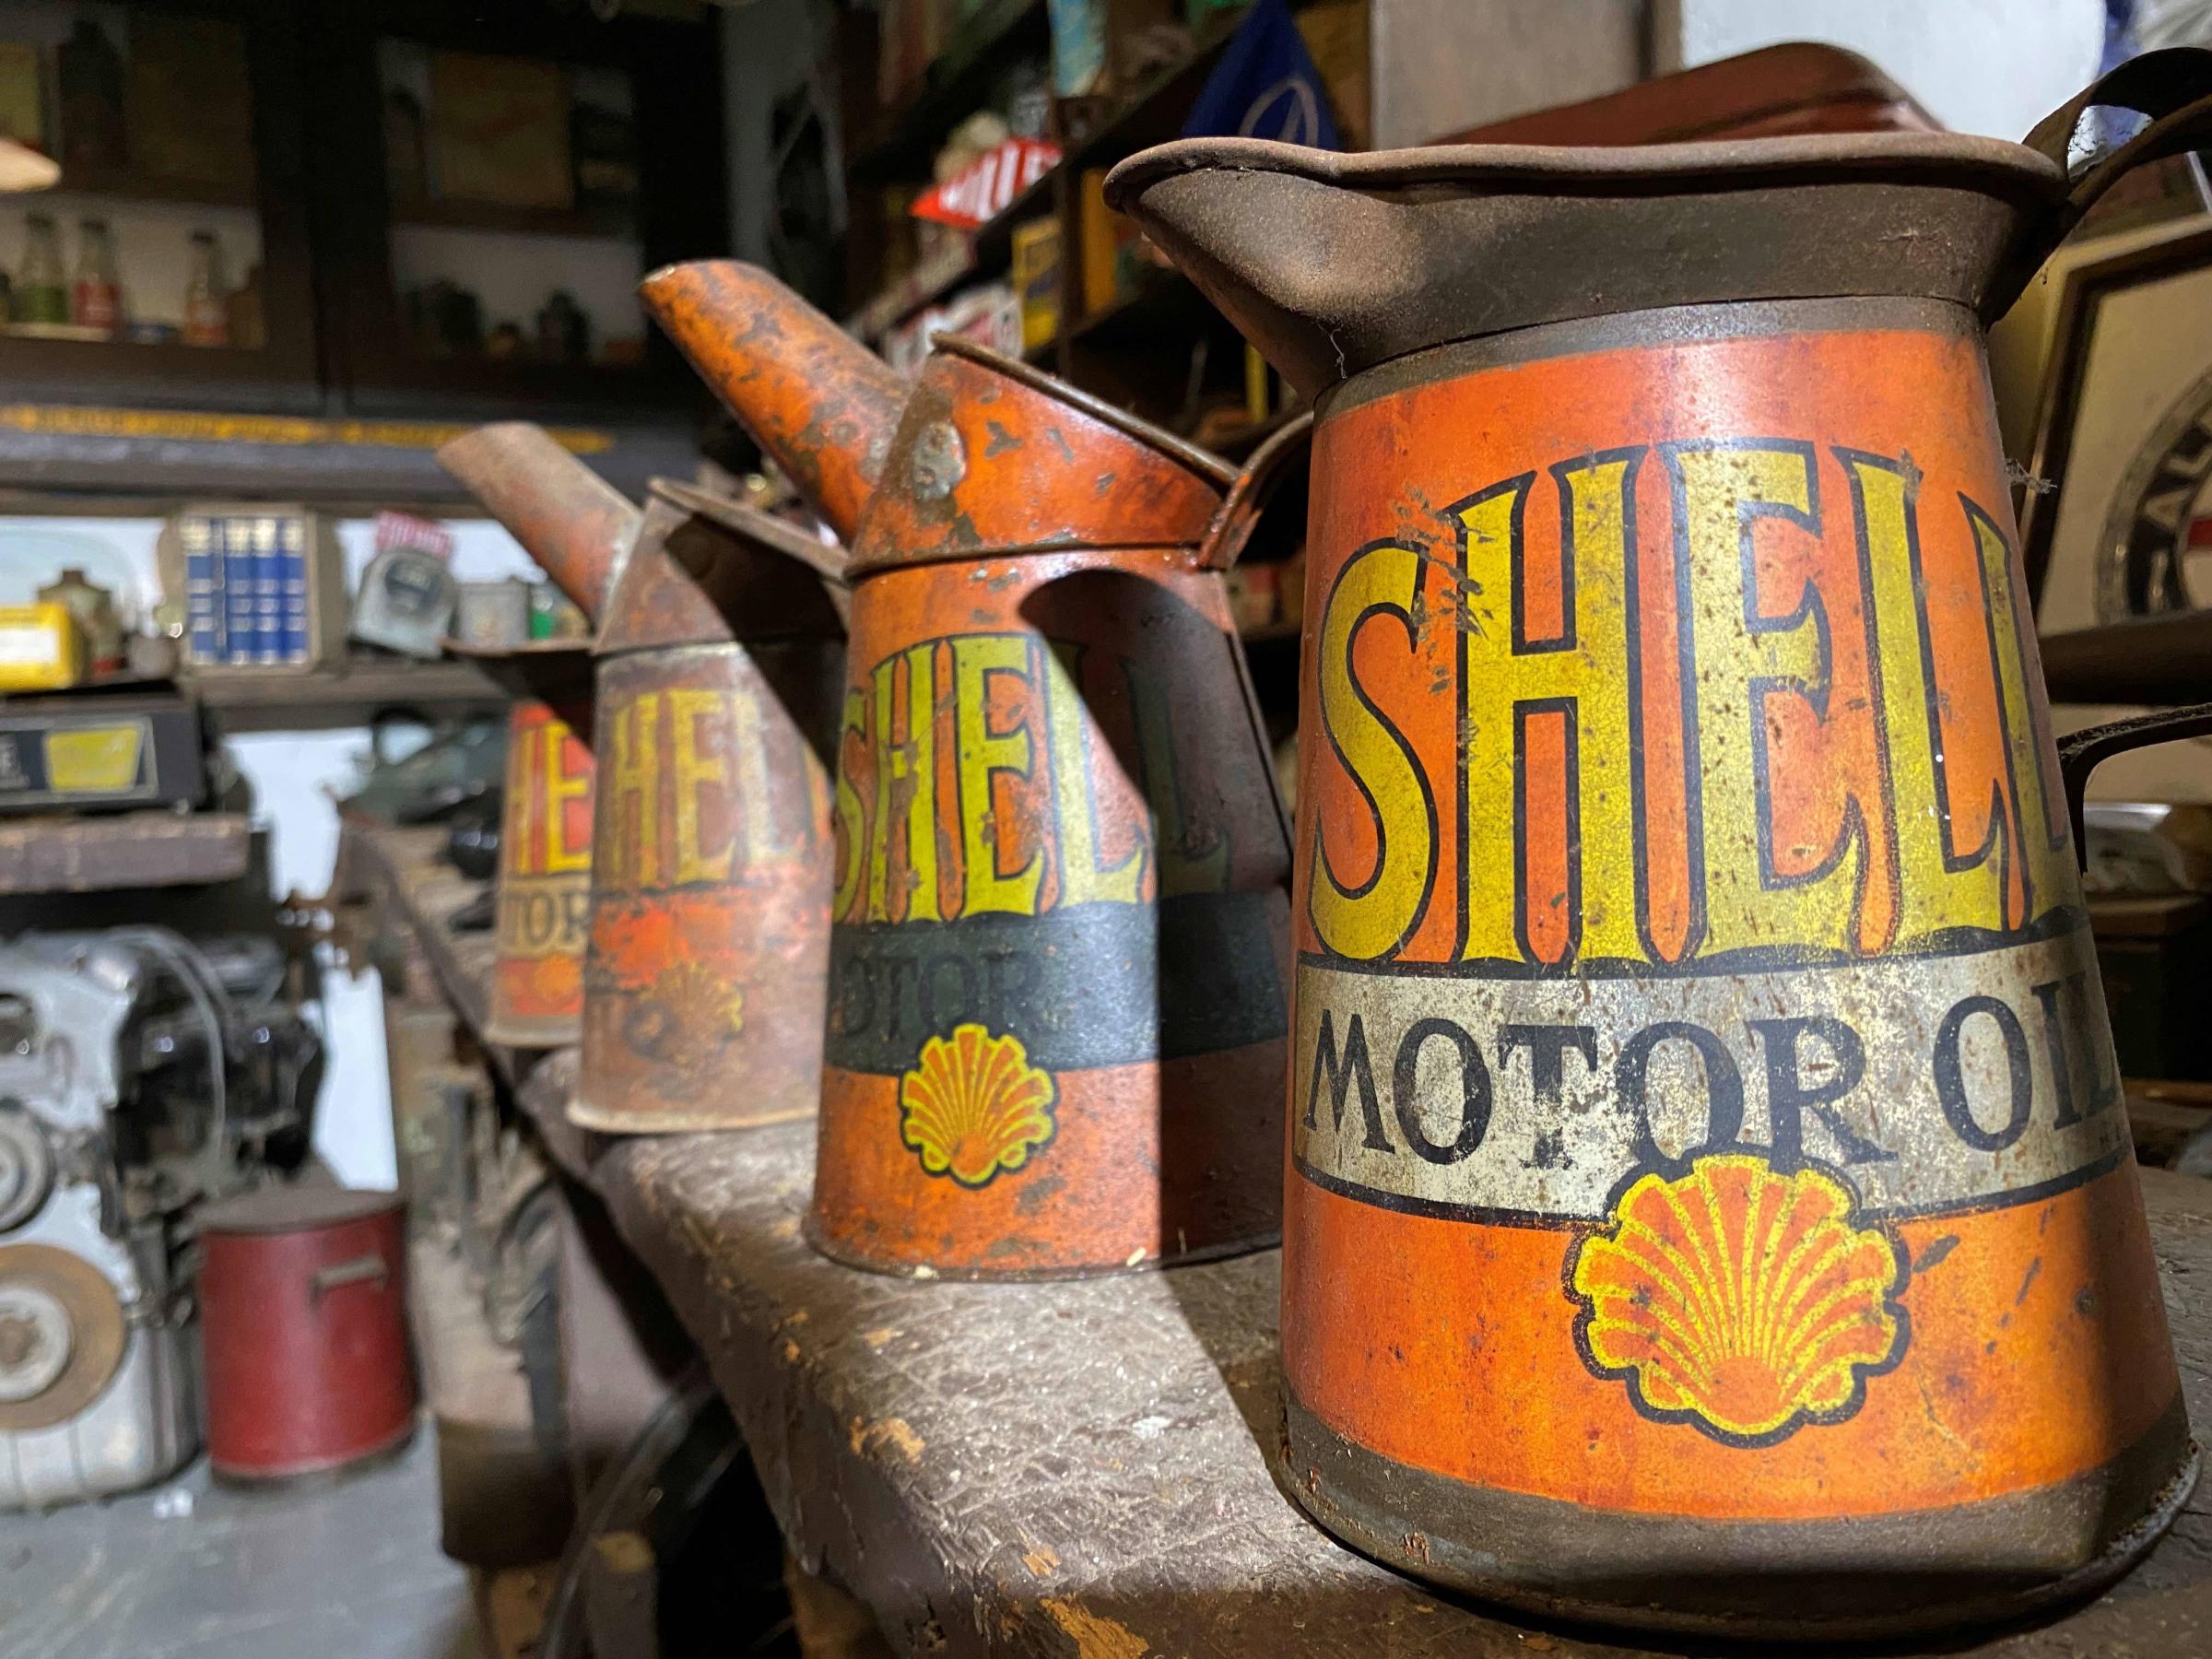 SHELL: The Shell logo nods to the origin of the company